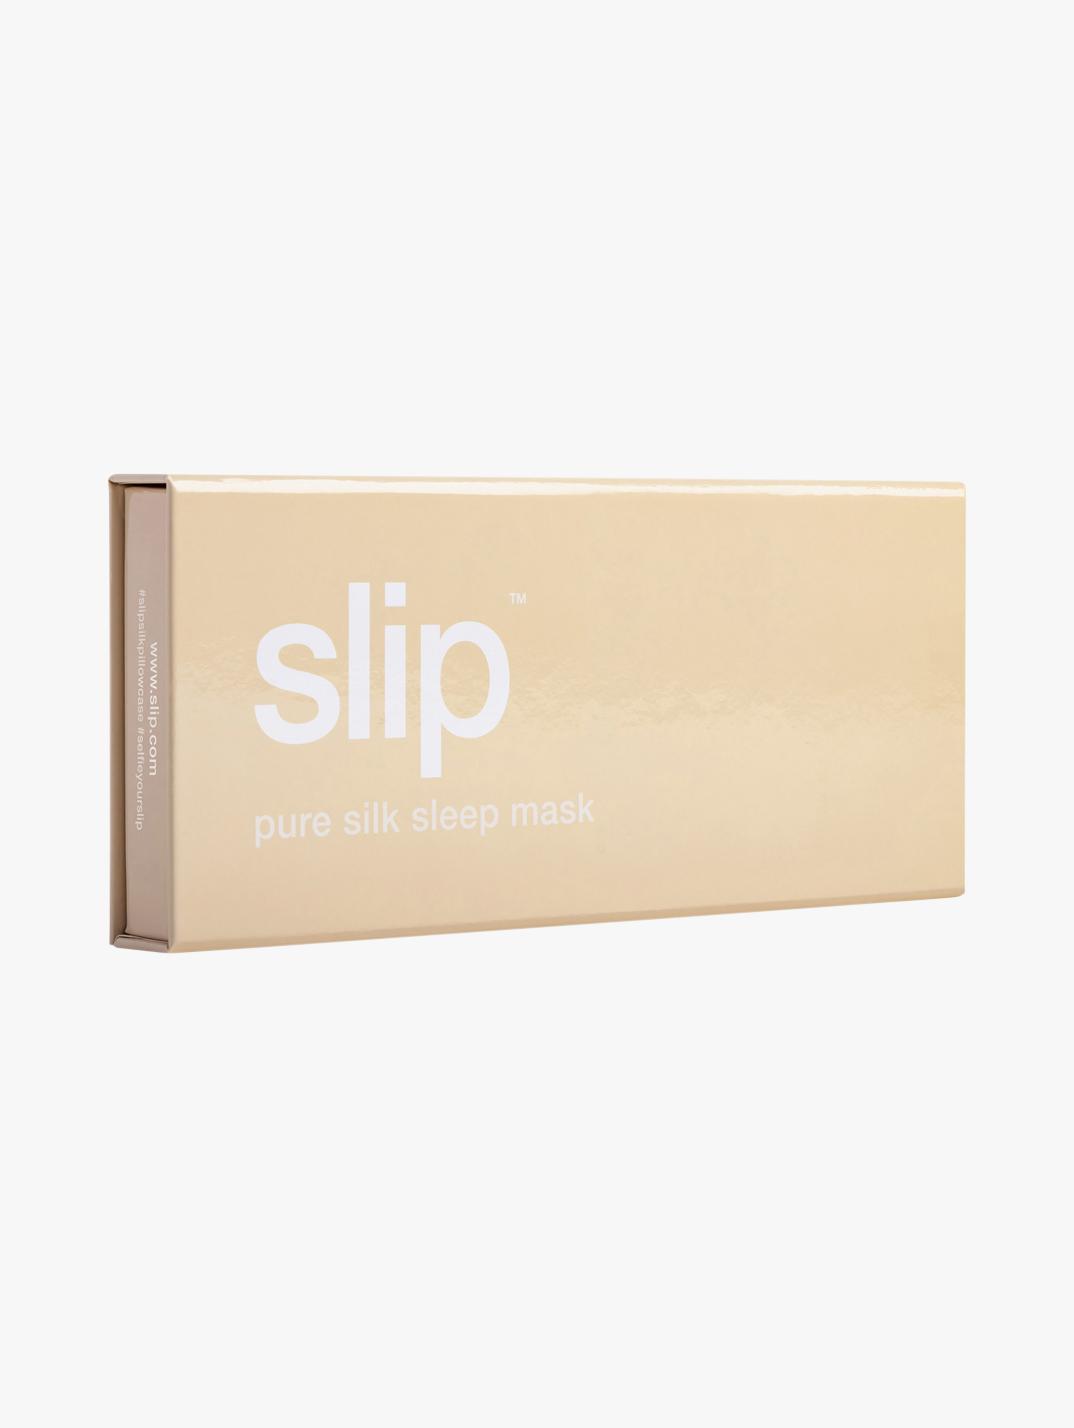 Slip Sleep Mask Review